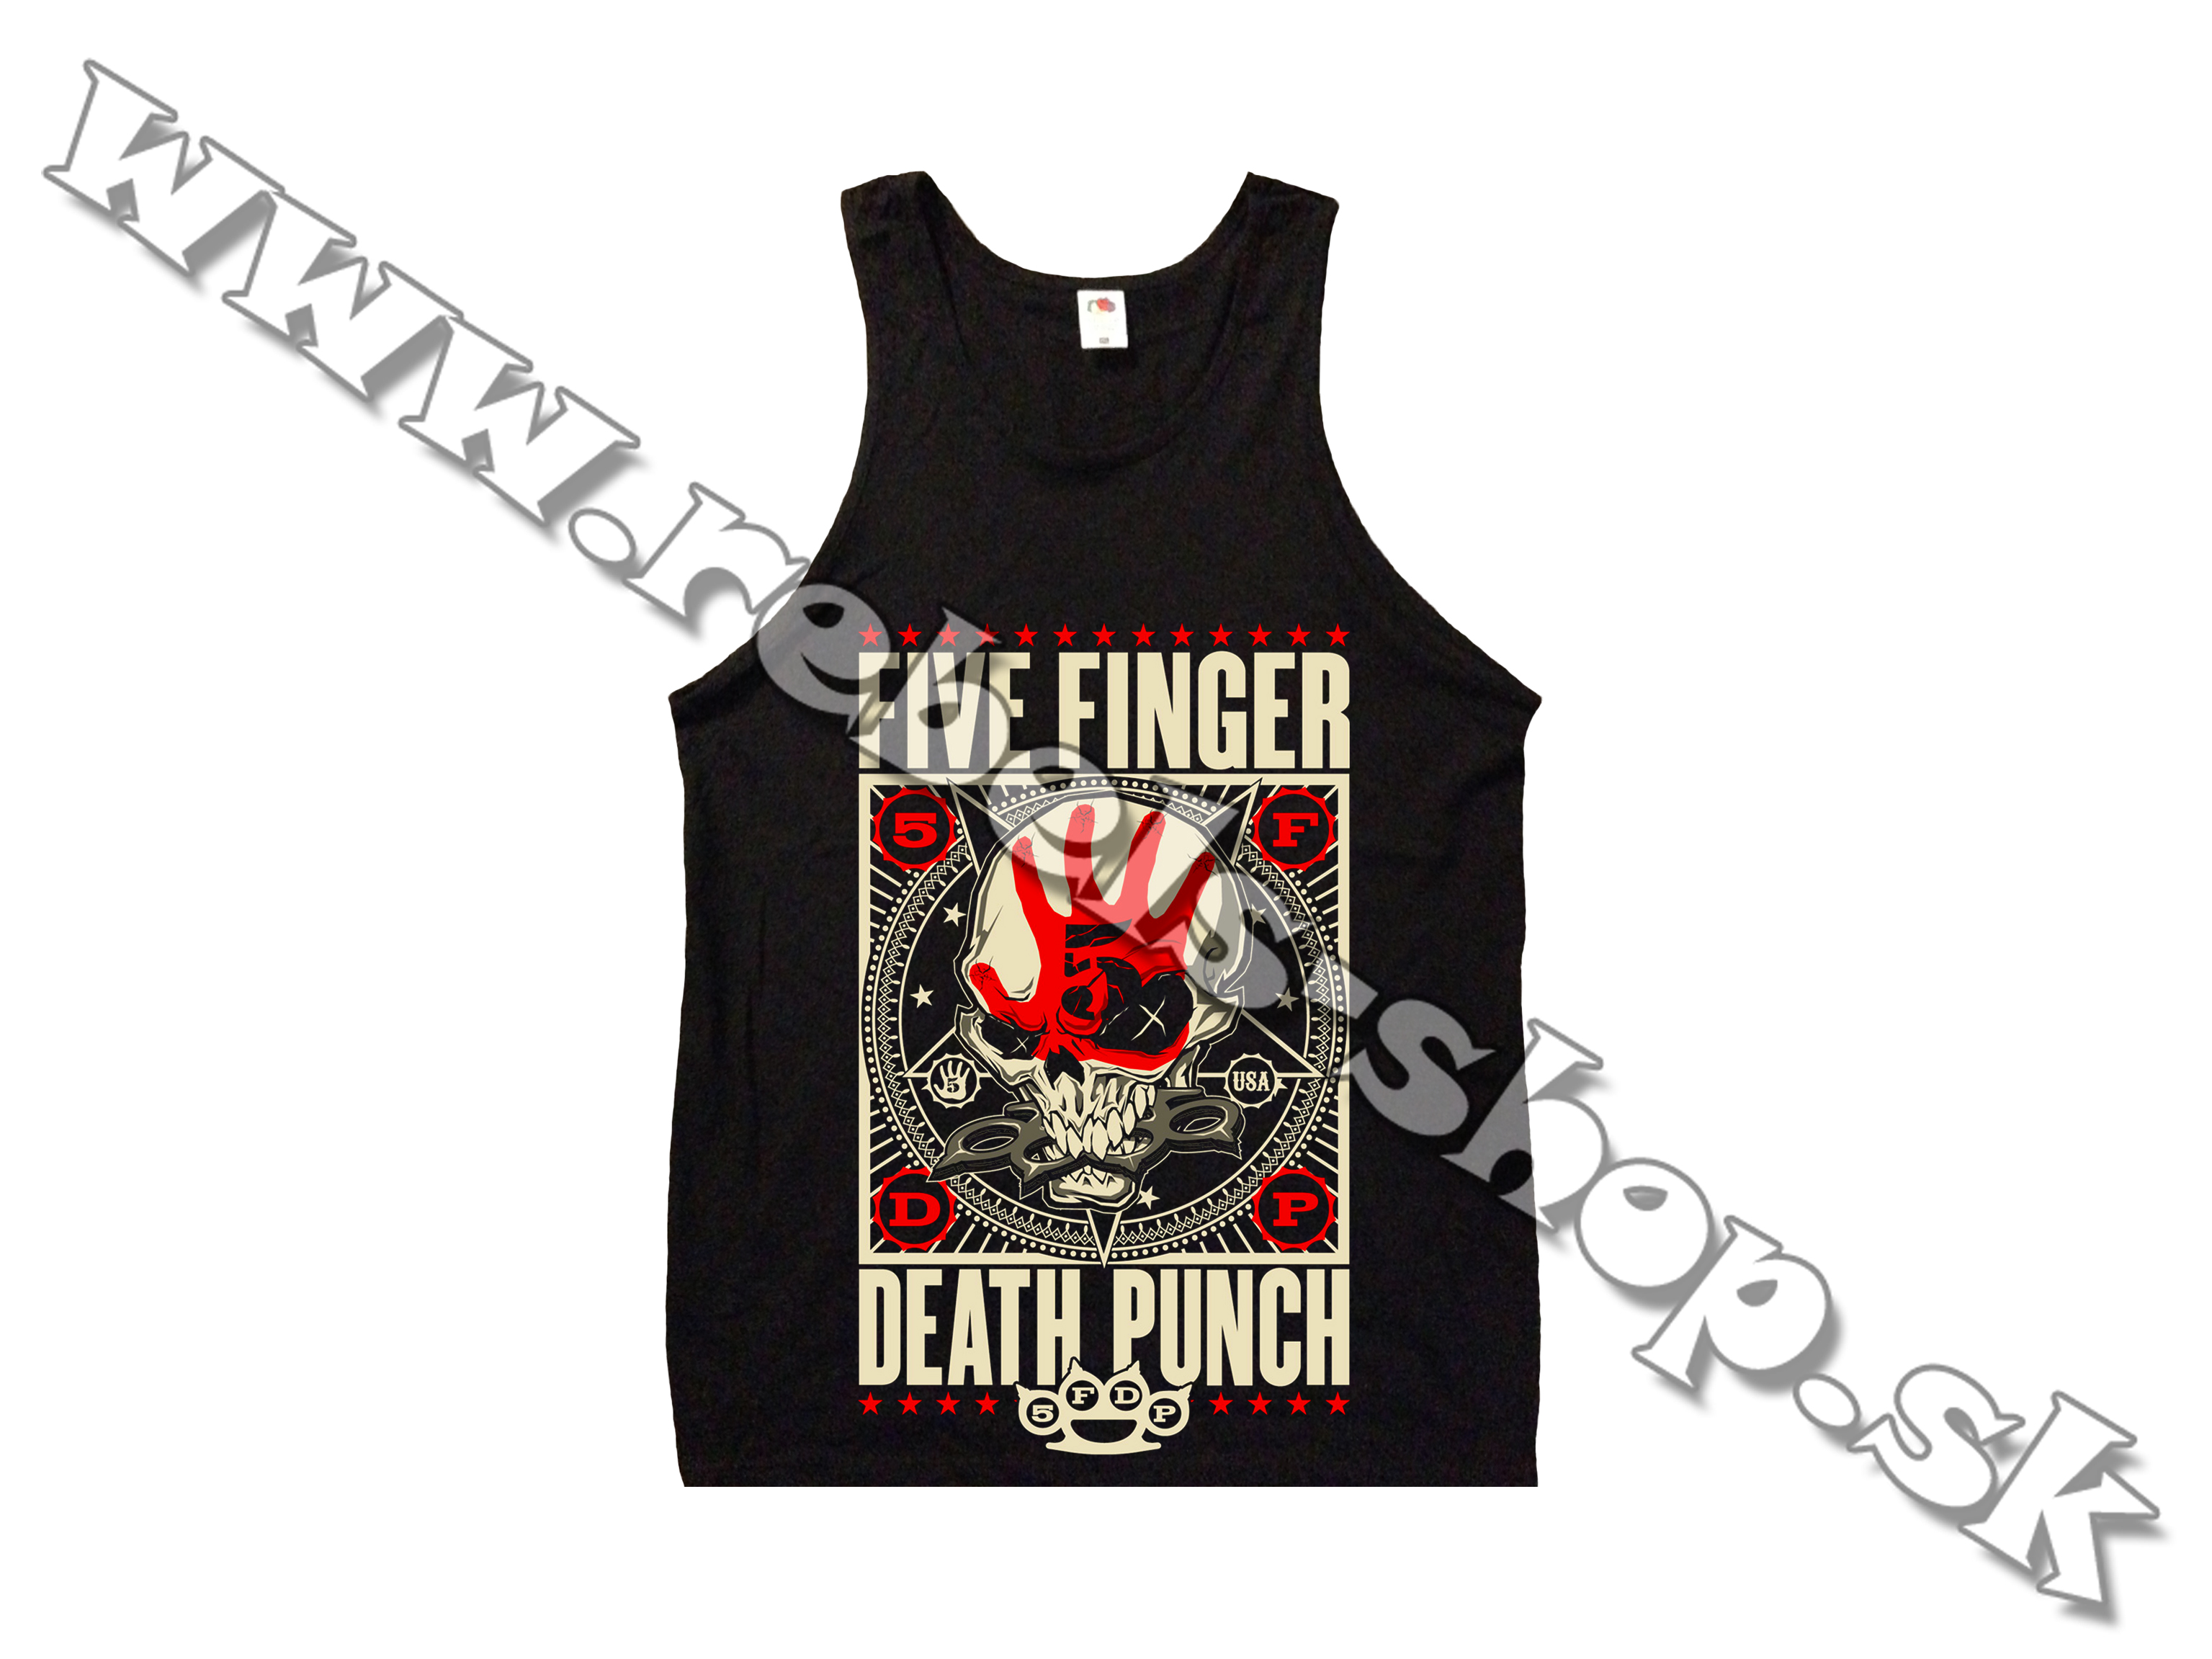 Tielko "Five Finger Death Punch"